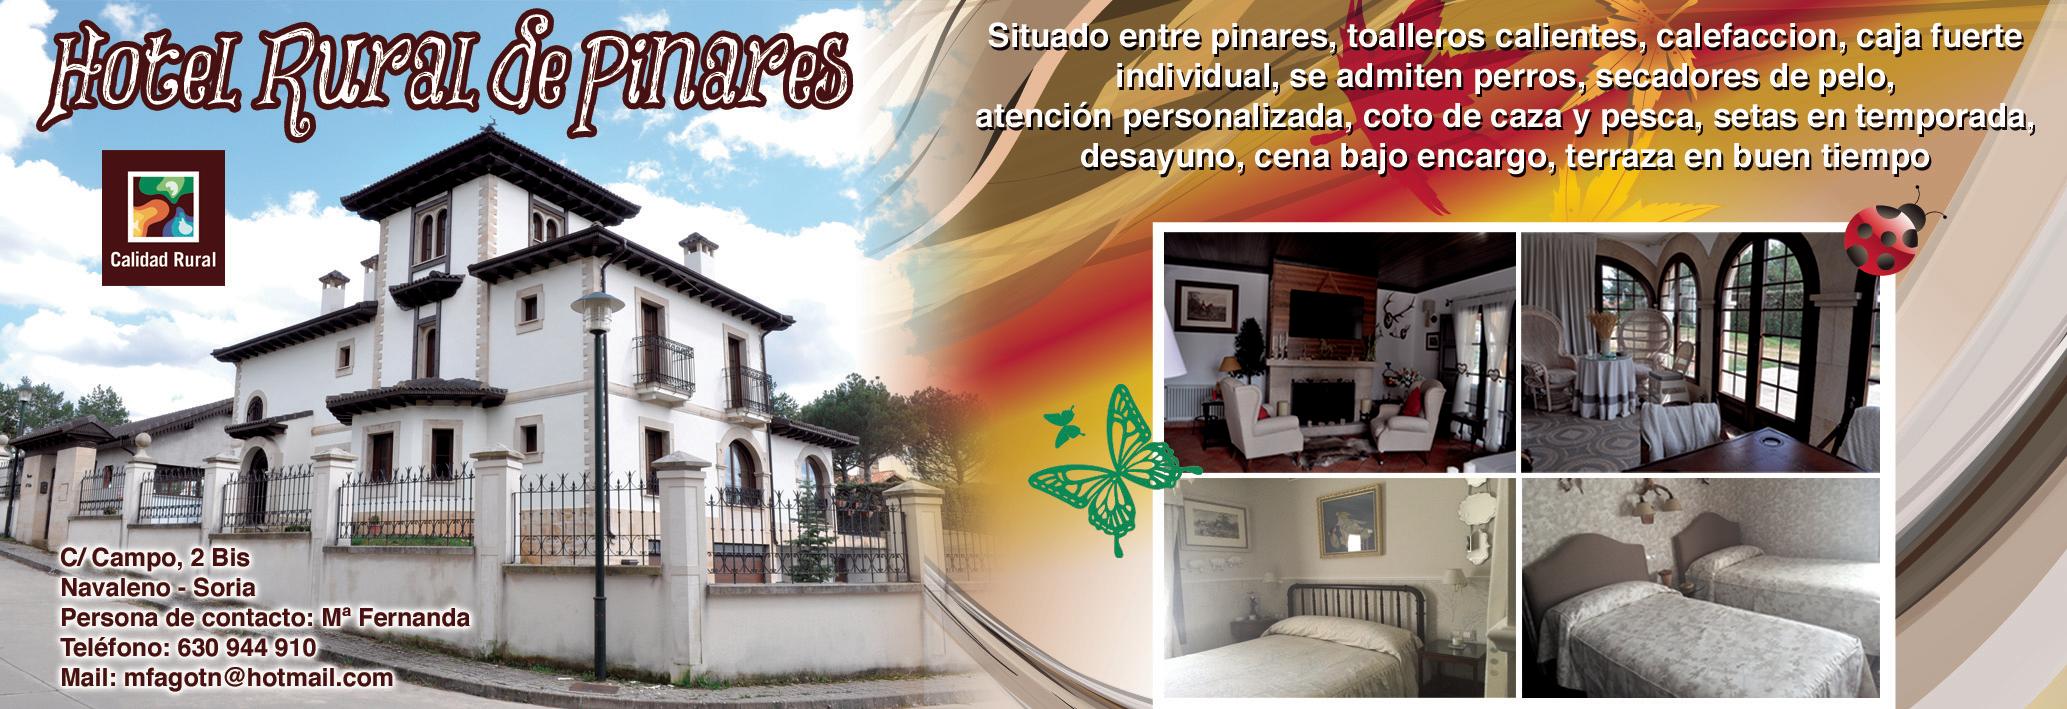 Images Hotel Rural De Pinares